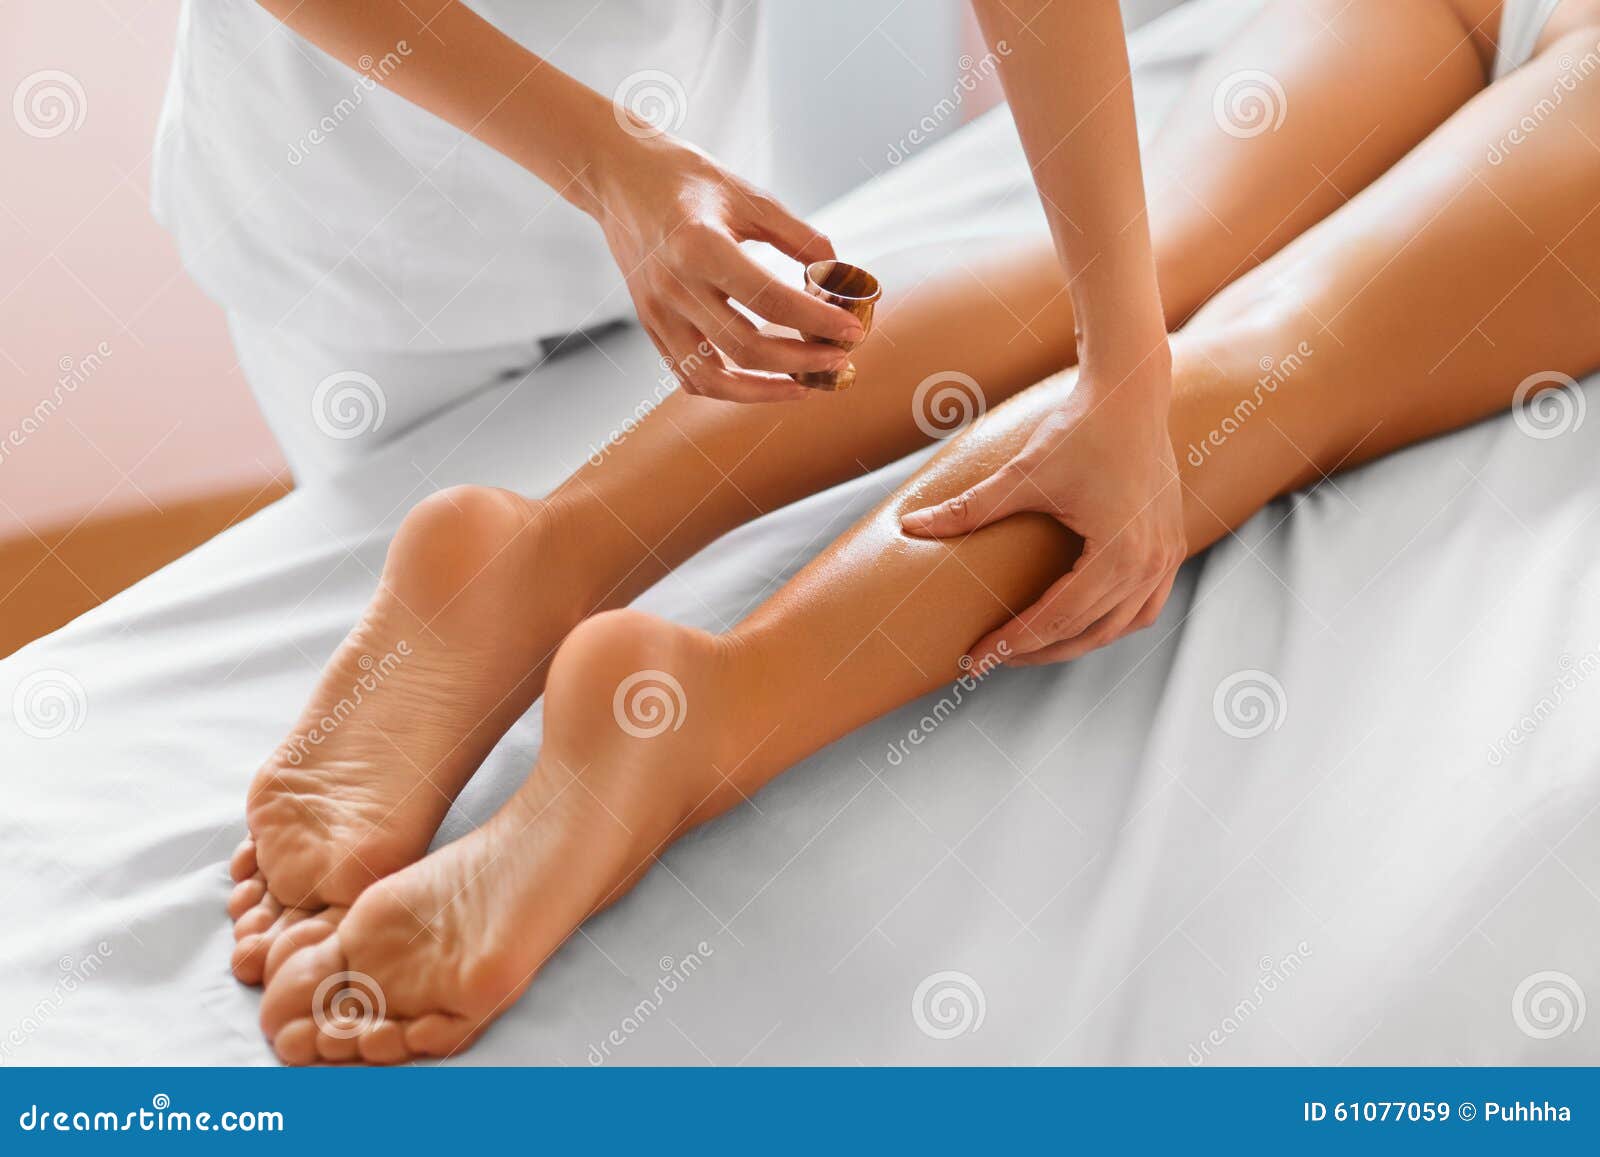 Women Getting Sexy Massages 25